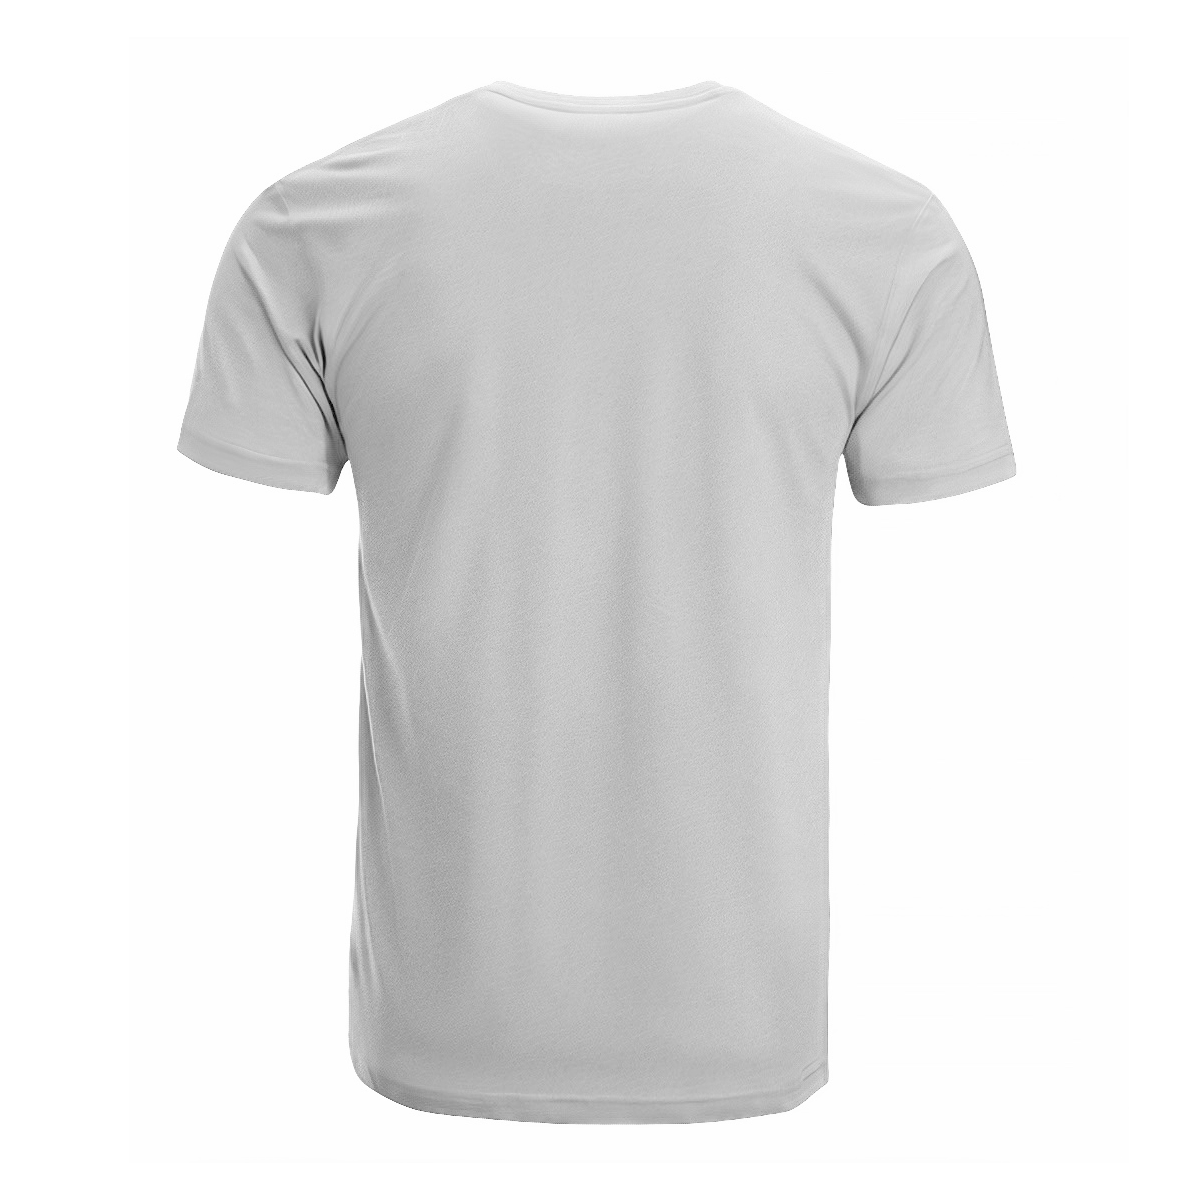 Hay Tartan Crest T-shirt - I'm not yelling style